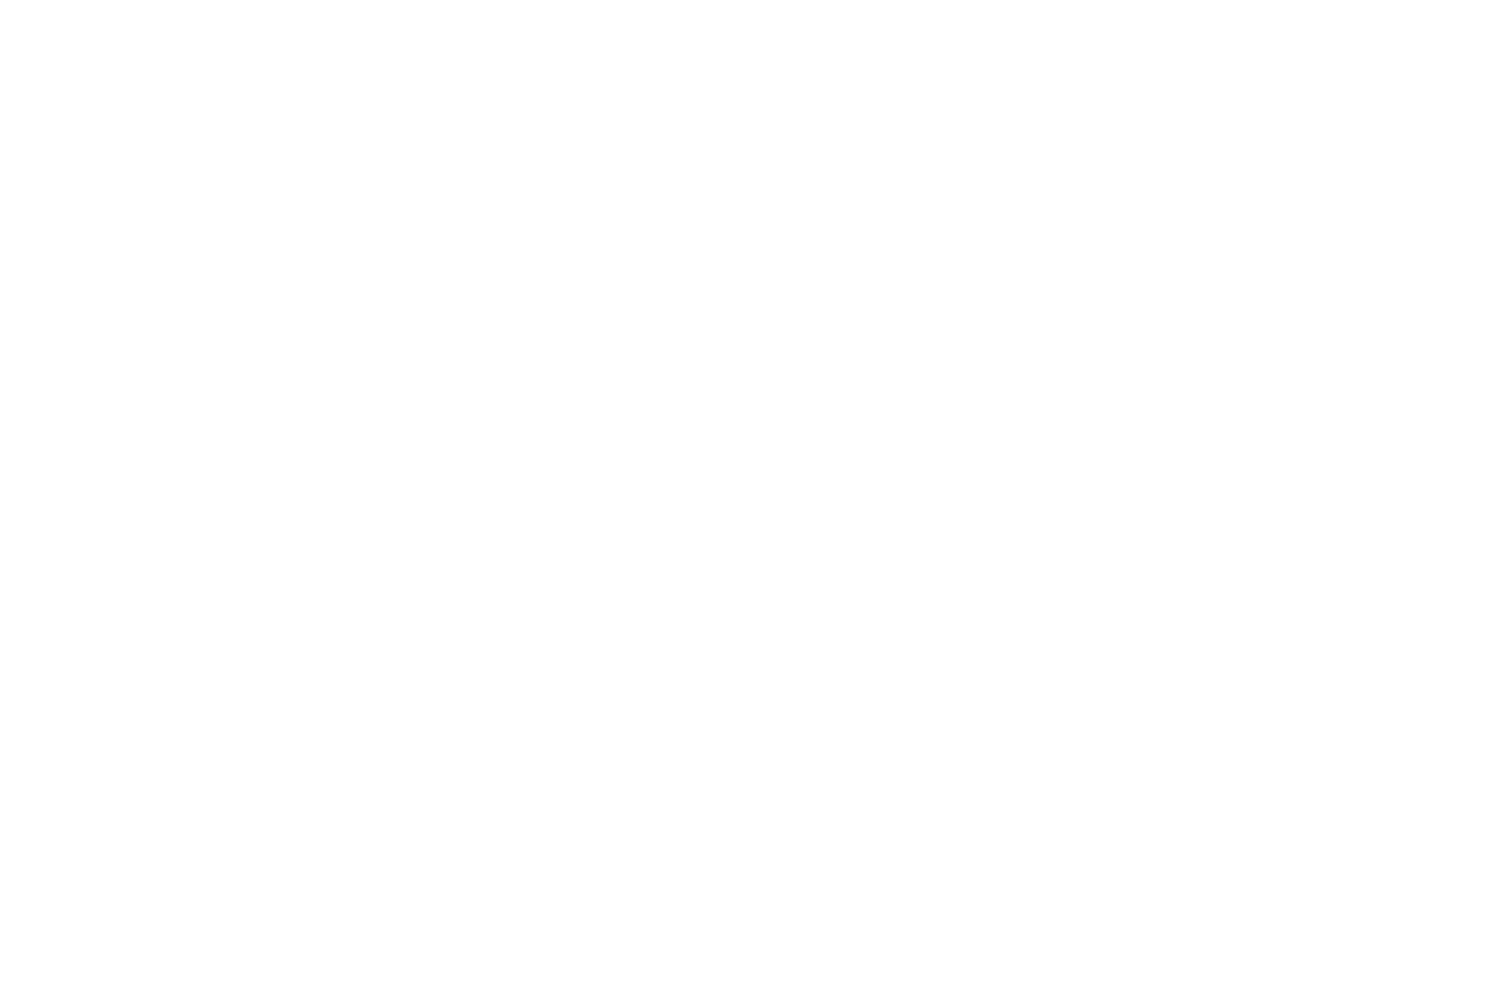 Biesterfeld logo in white